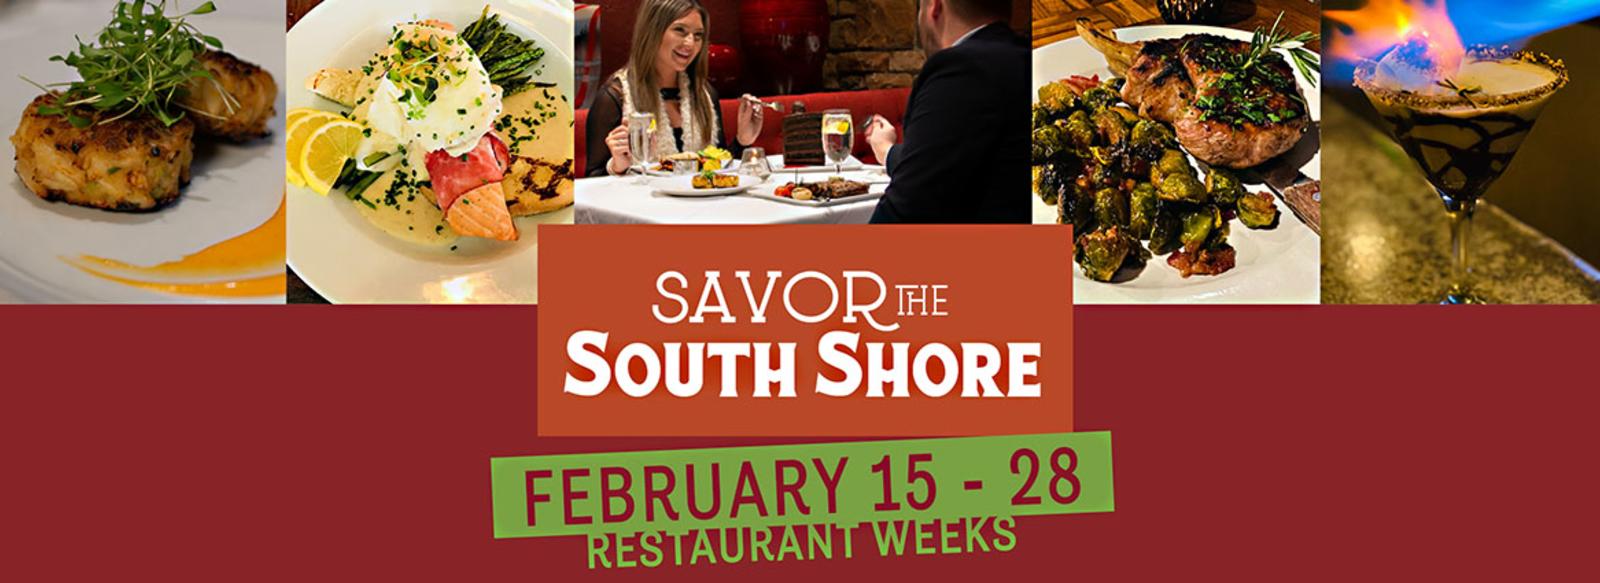 Savor The South Shore Participating Restaurants Menus